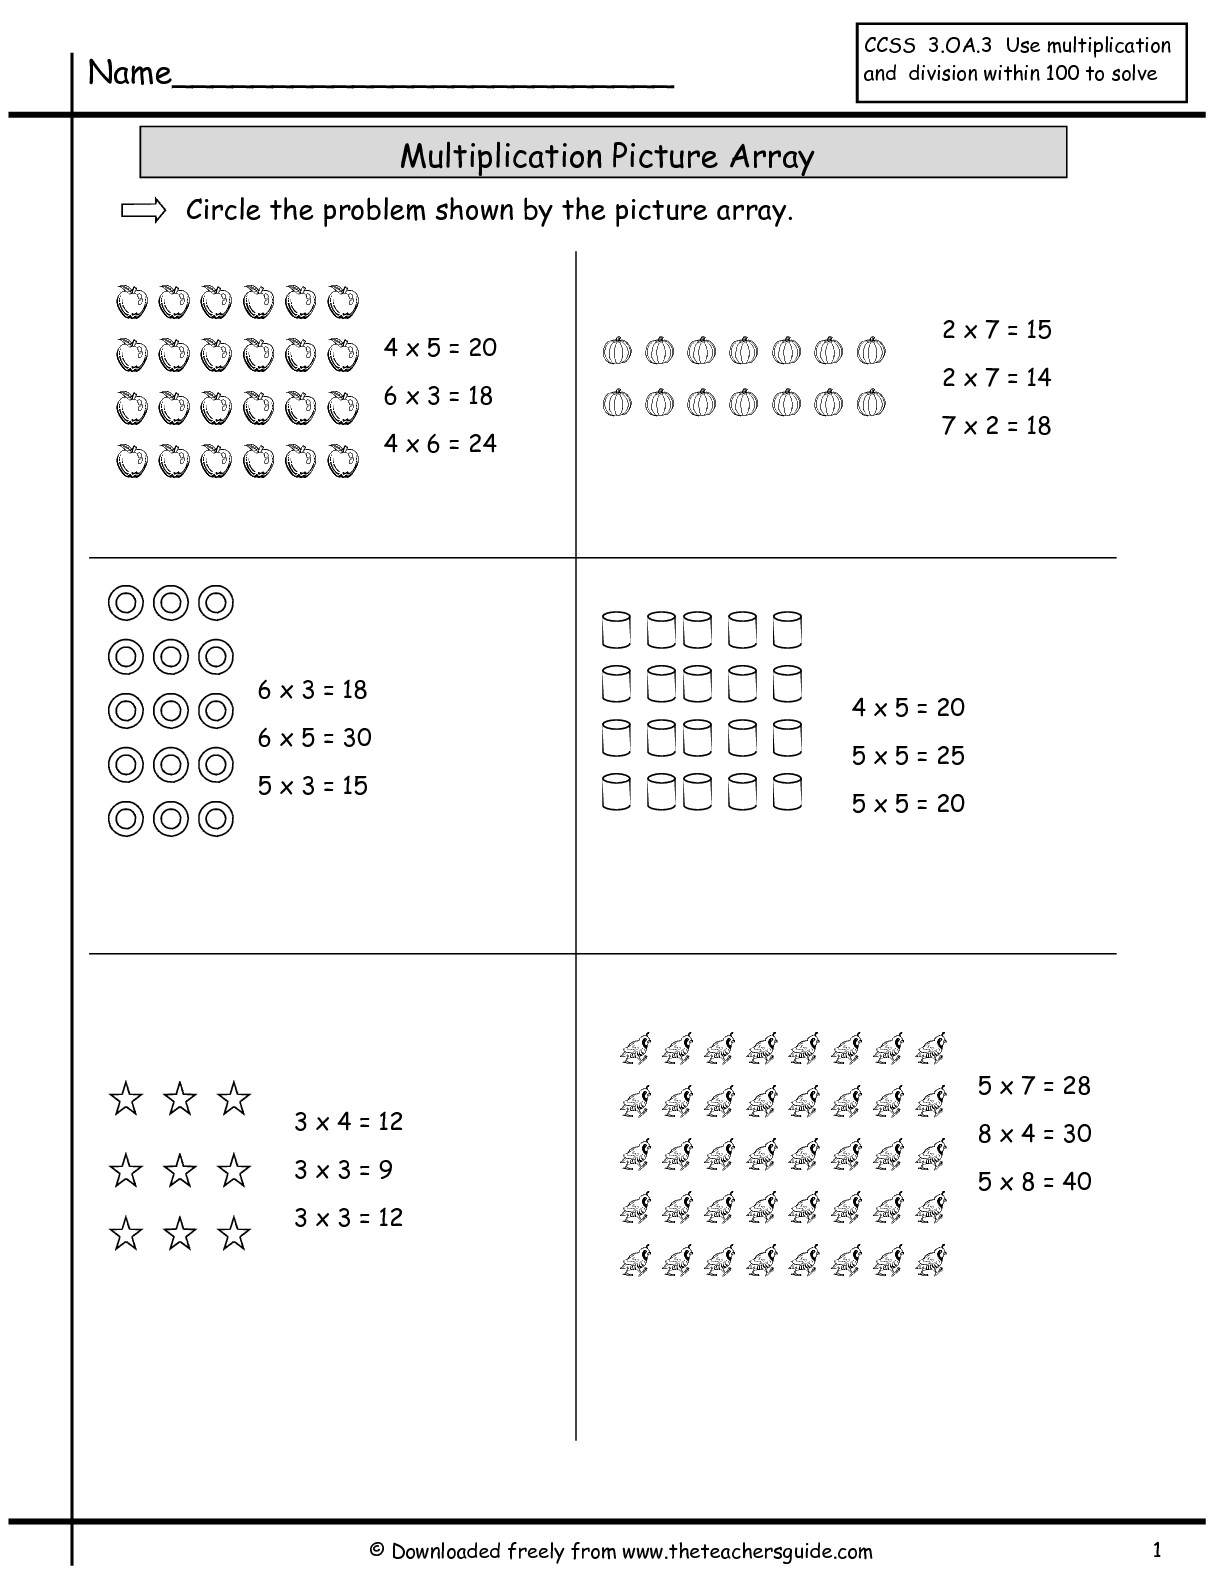 Multiplication Array Worksheets 3rd Grade Image